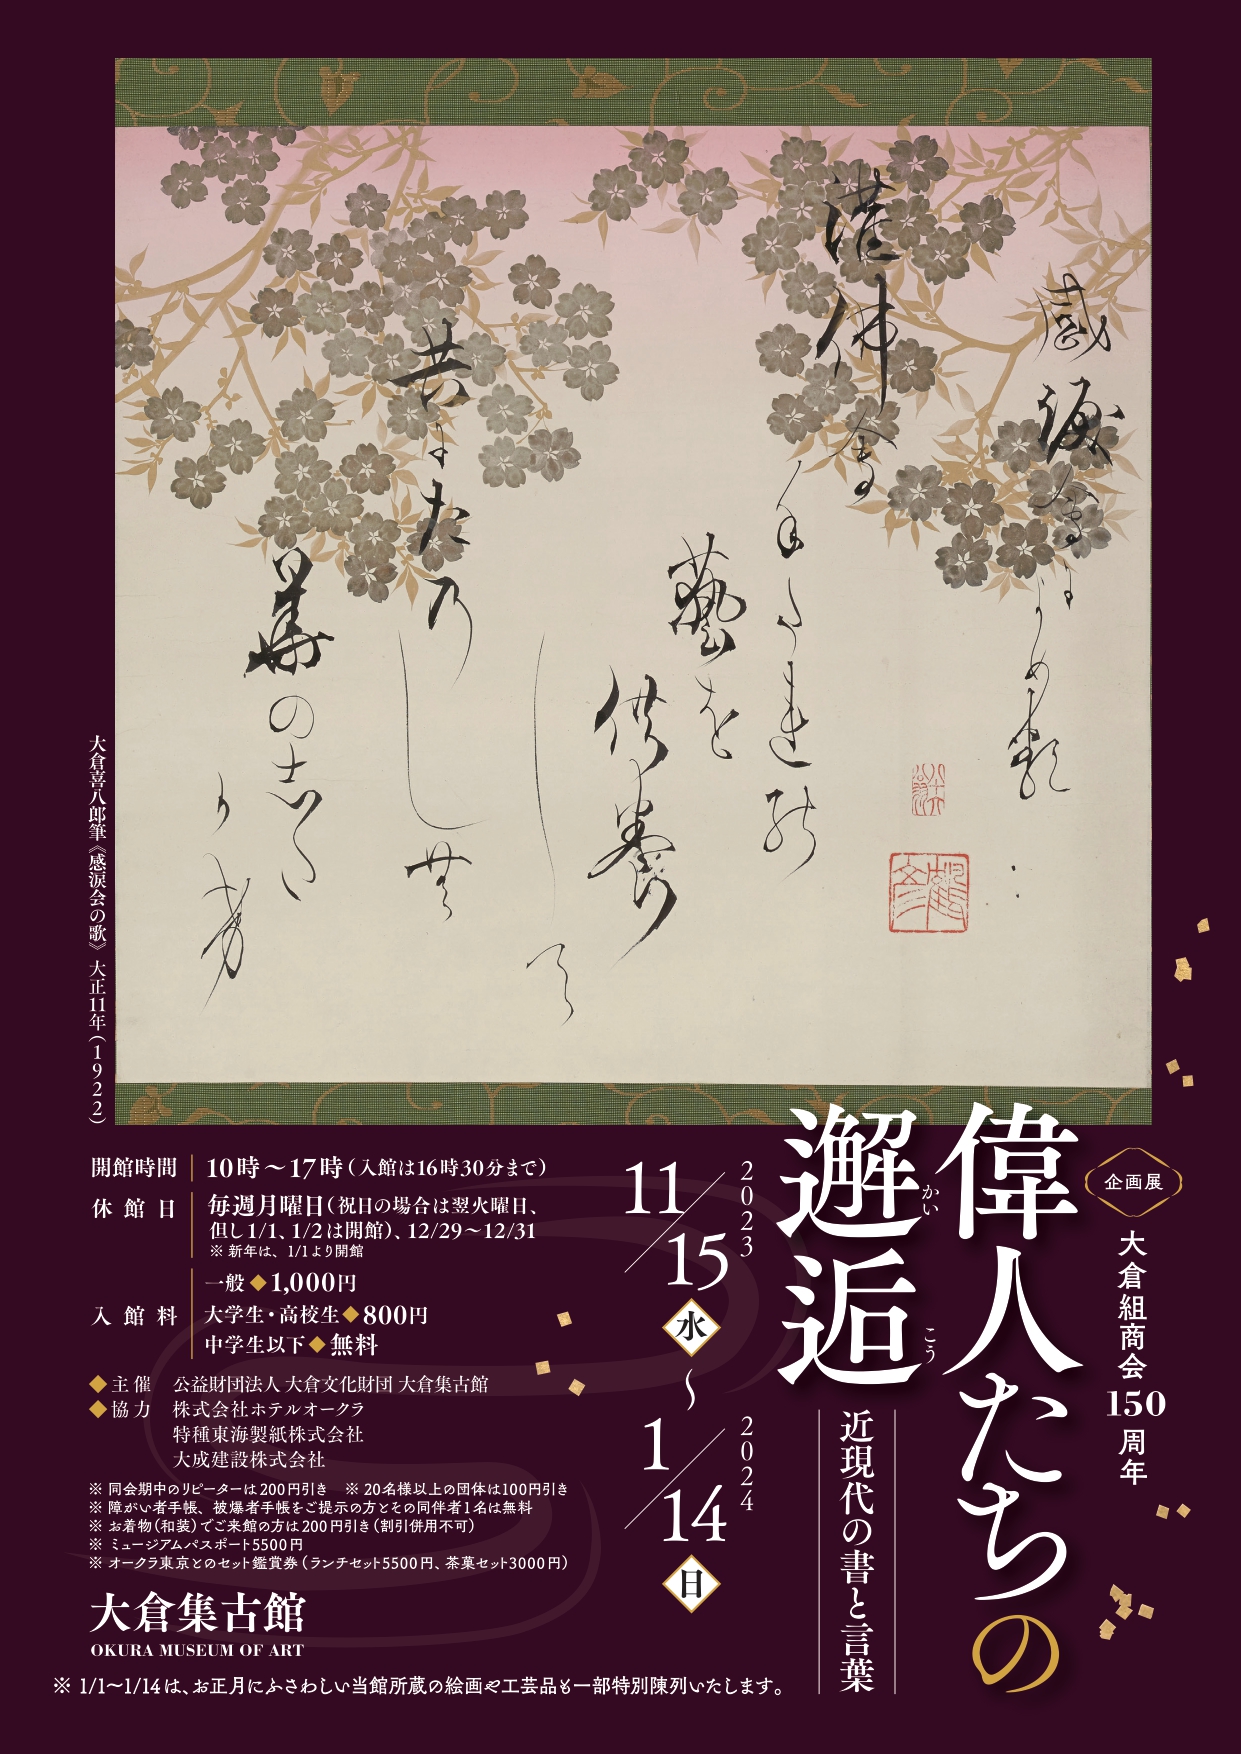 150th Anniversary of the Okura Gumi Shokai: Encounters with Great